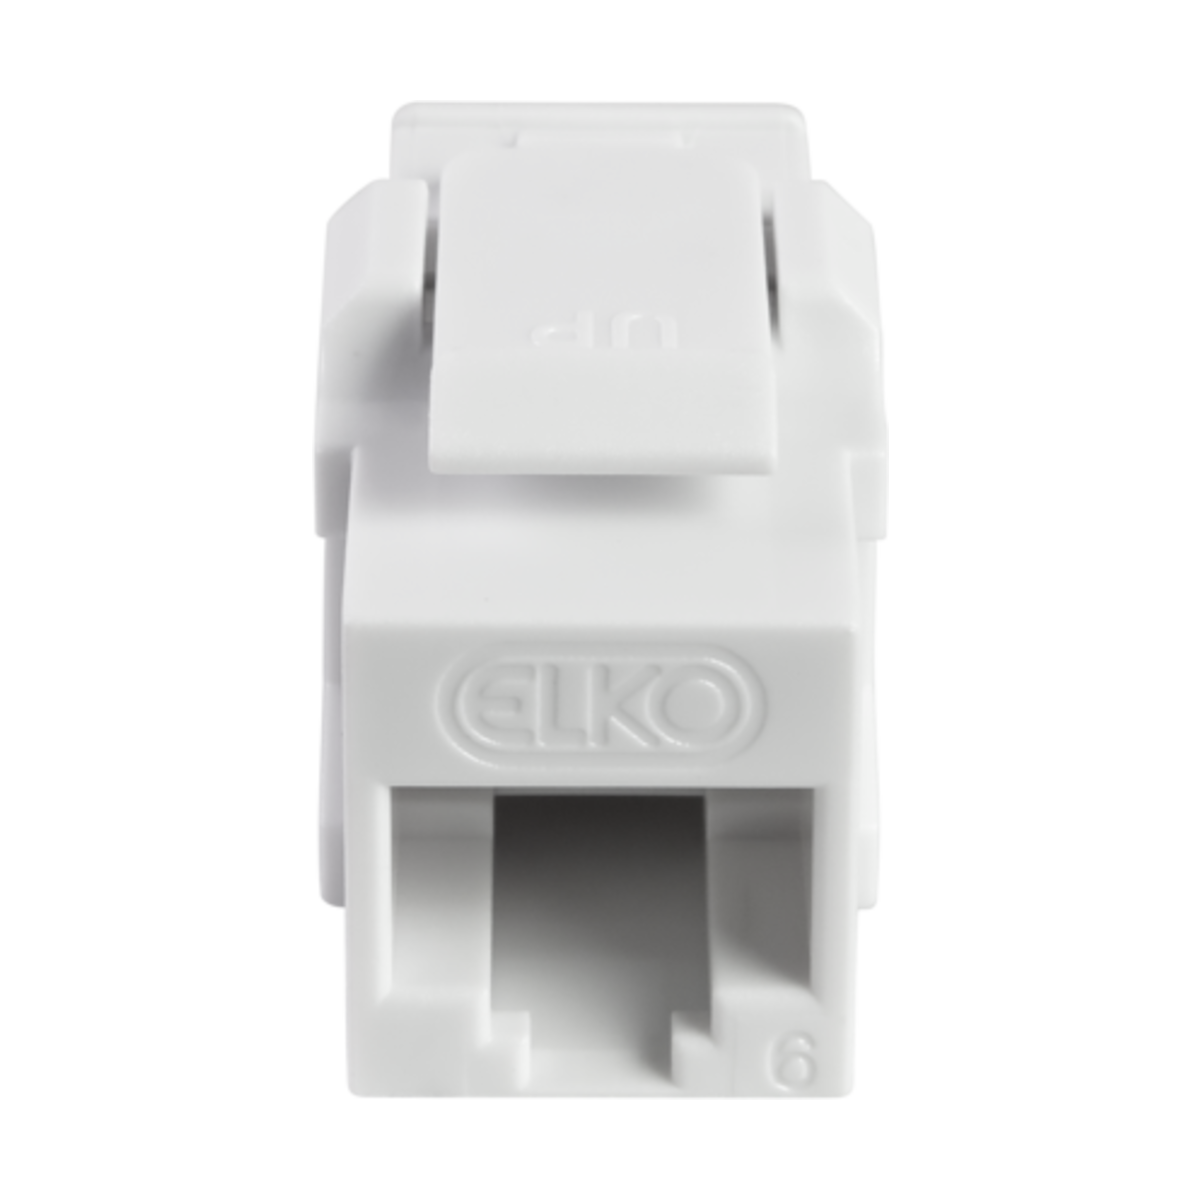 Croco UTP Cat6 konnektor Elko